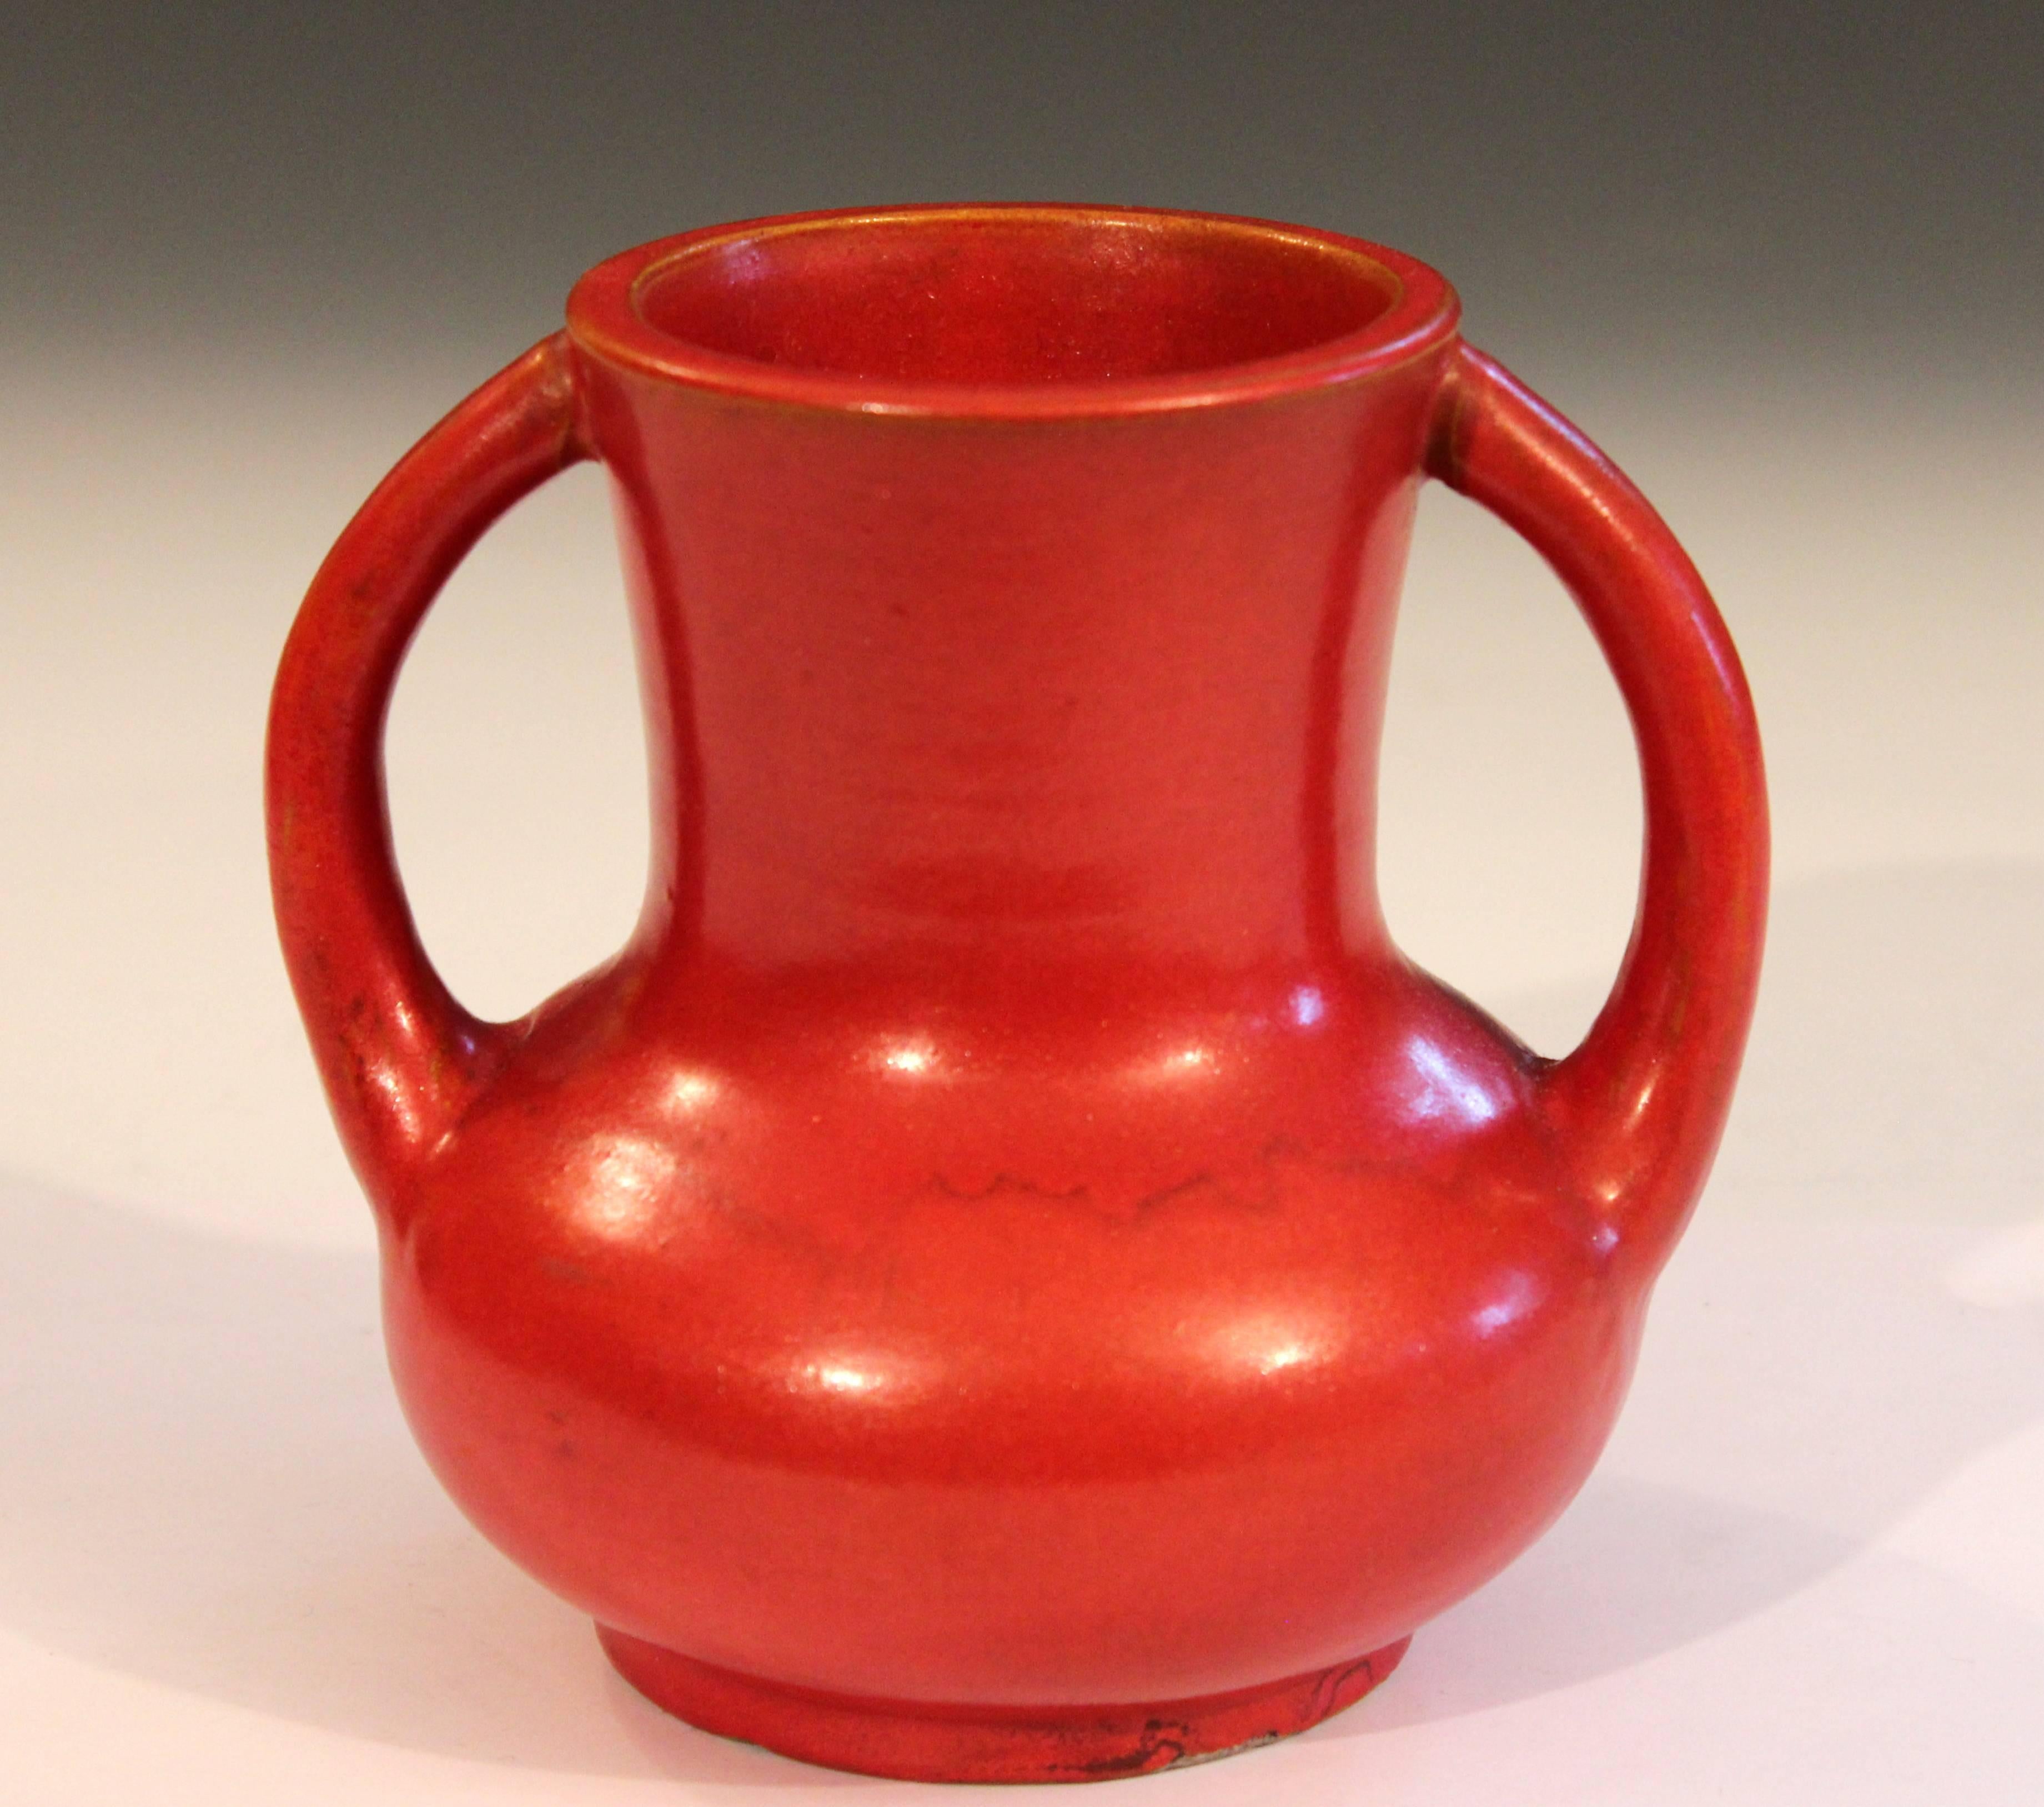 Vintage Awaji Pottery vase in chromium orange/red crystalline glaze, circa 1930. Measures: 6